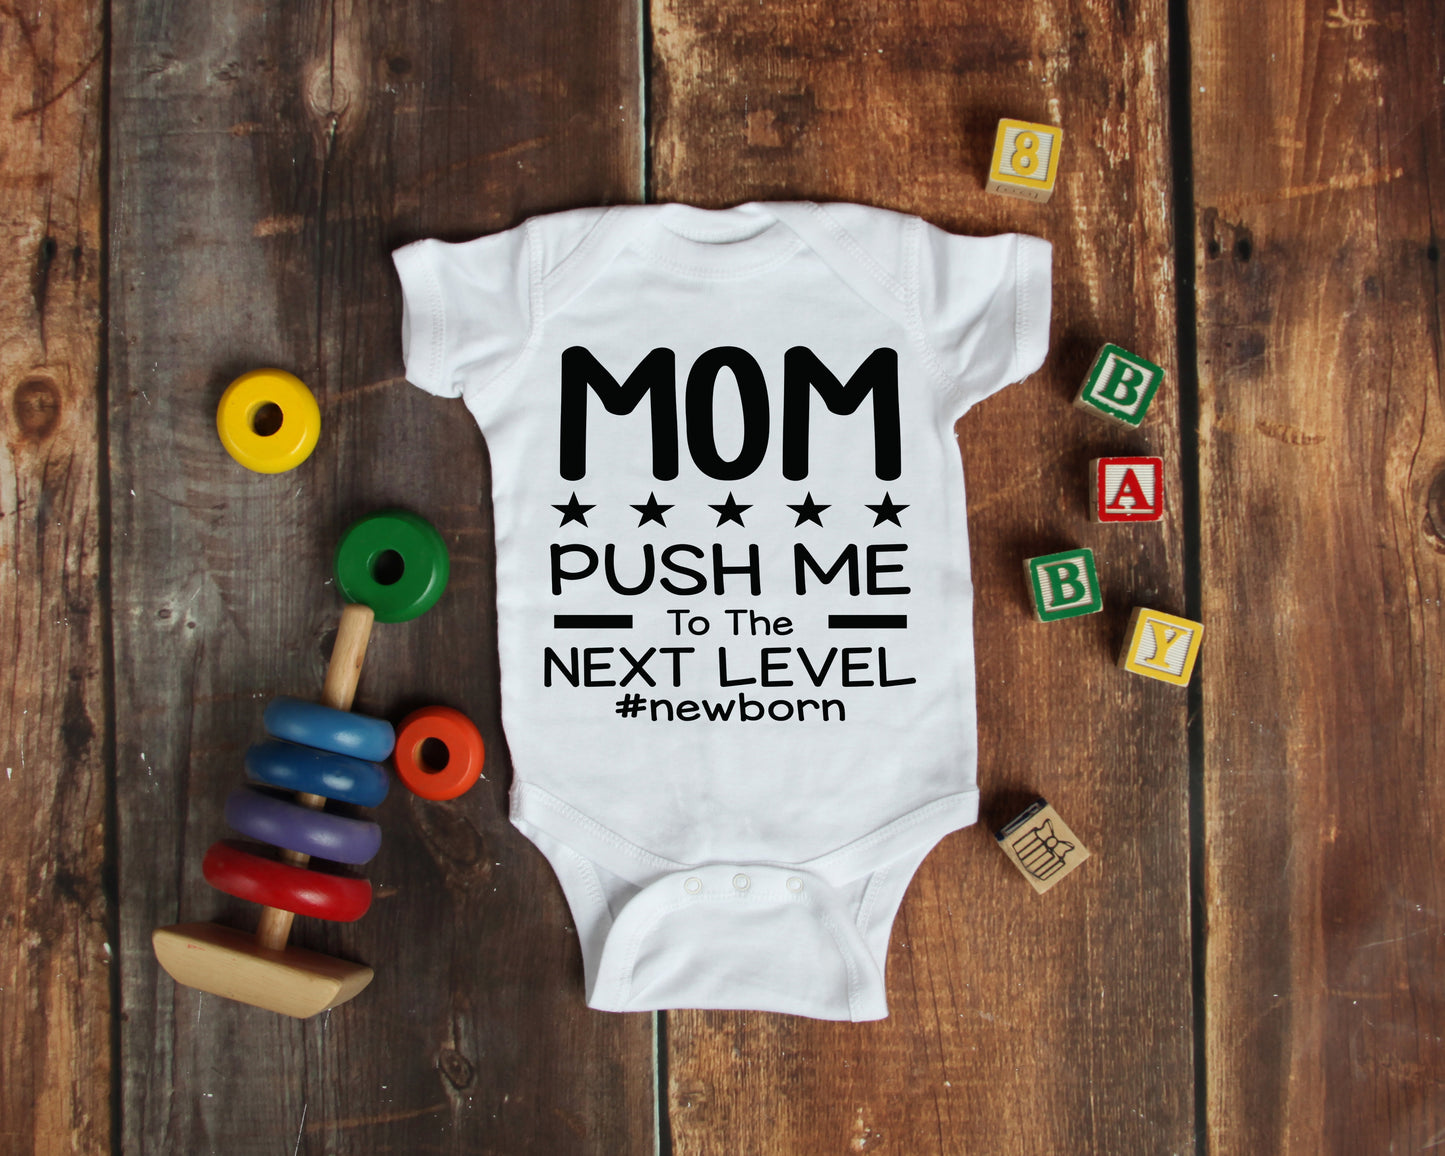 Mom Push Me To The Next Level #newborn